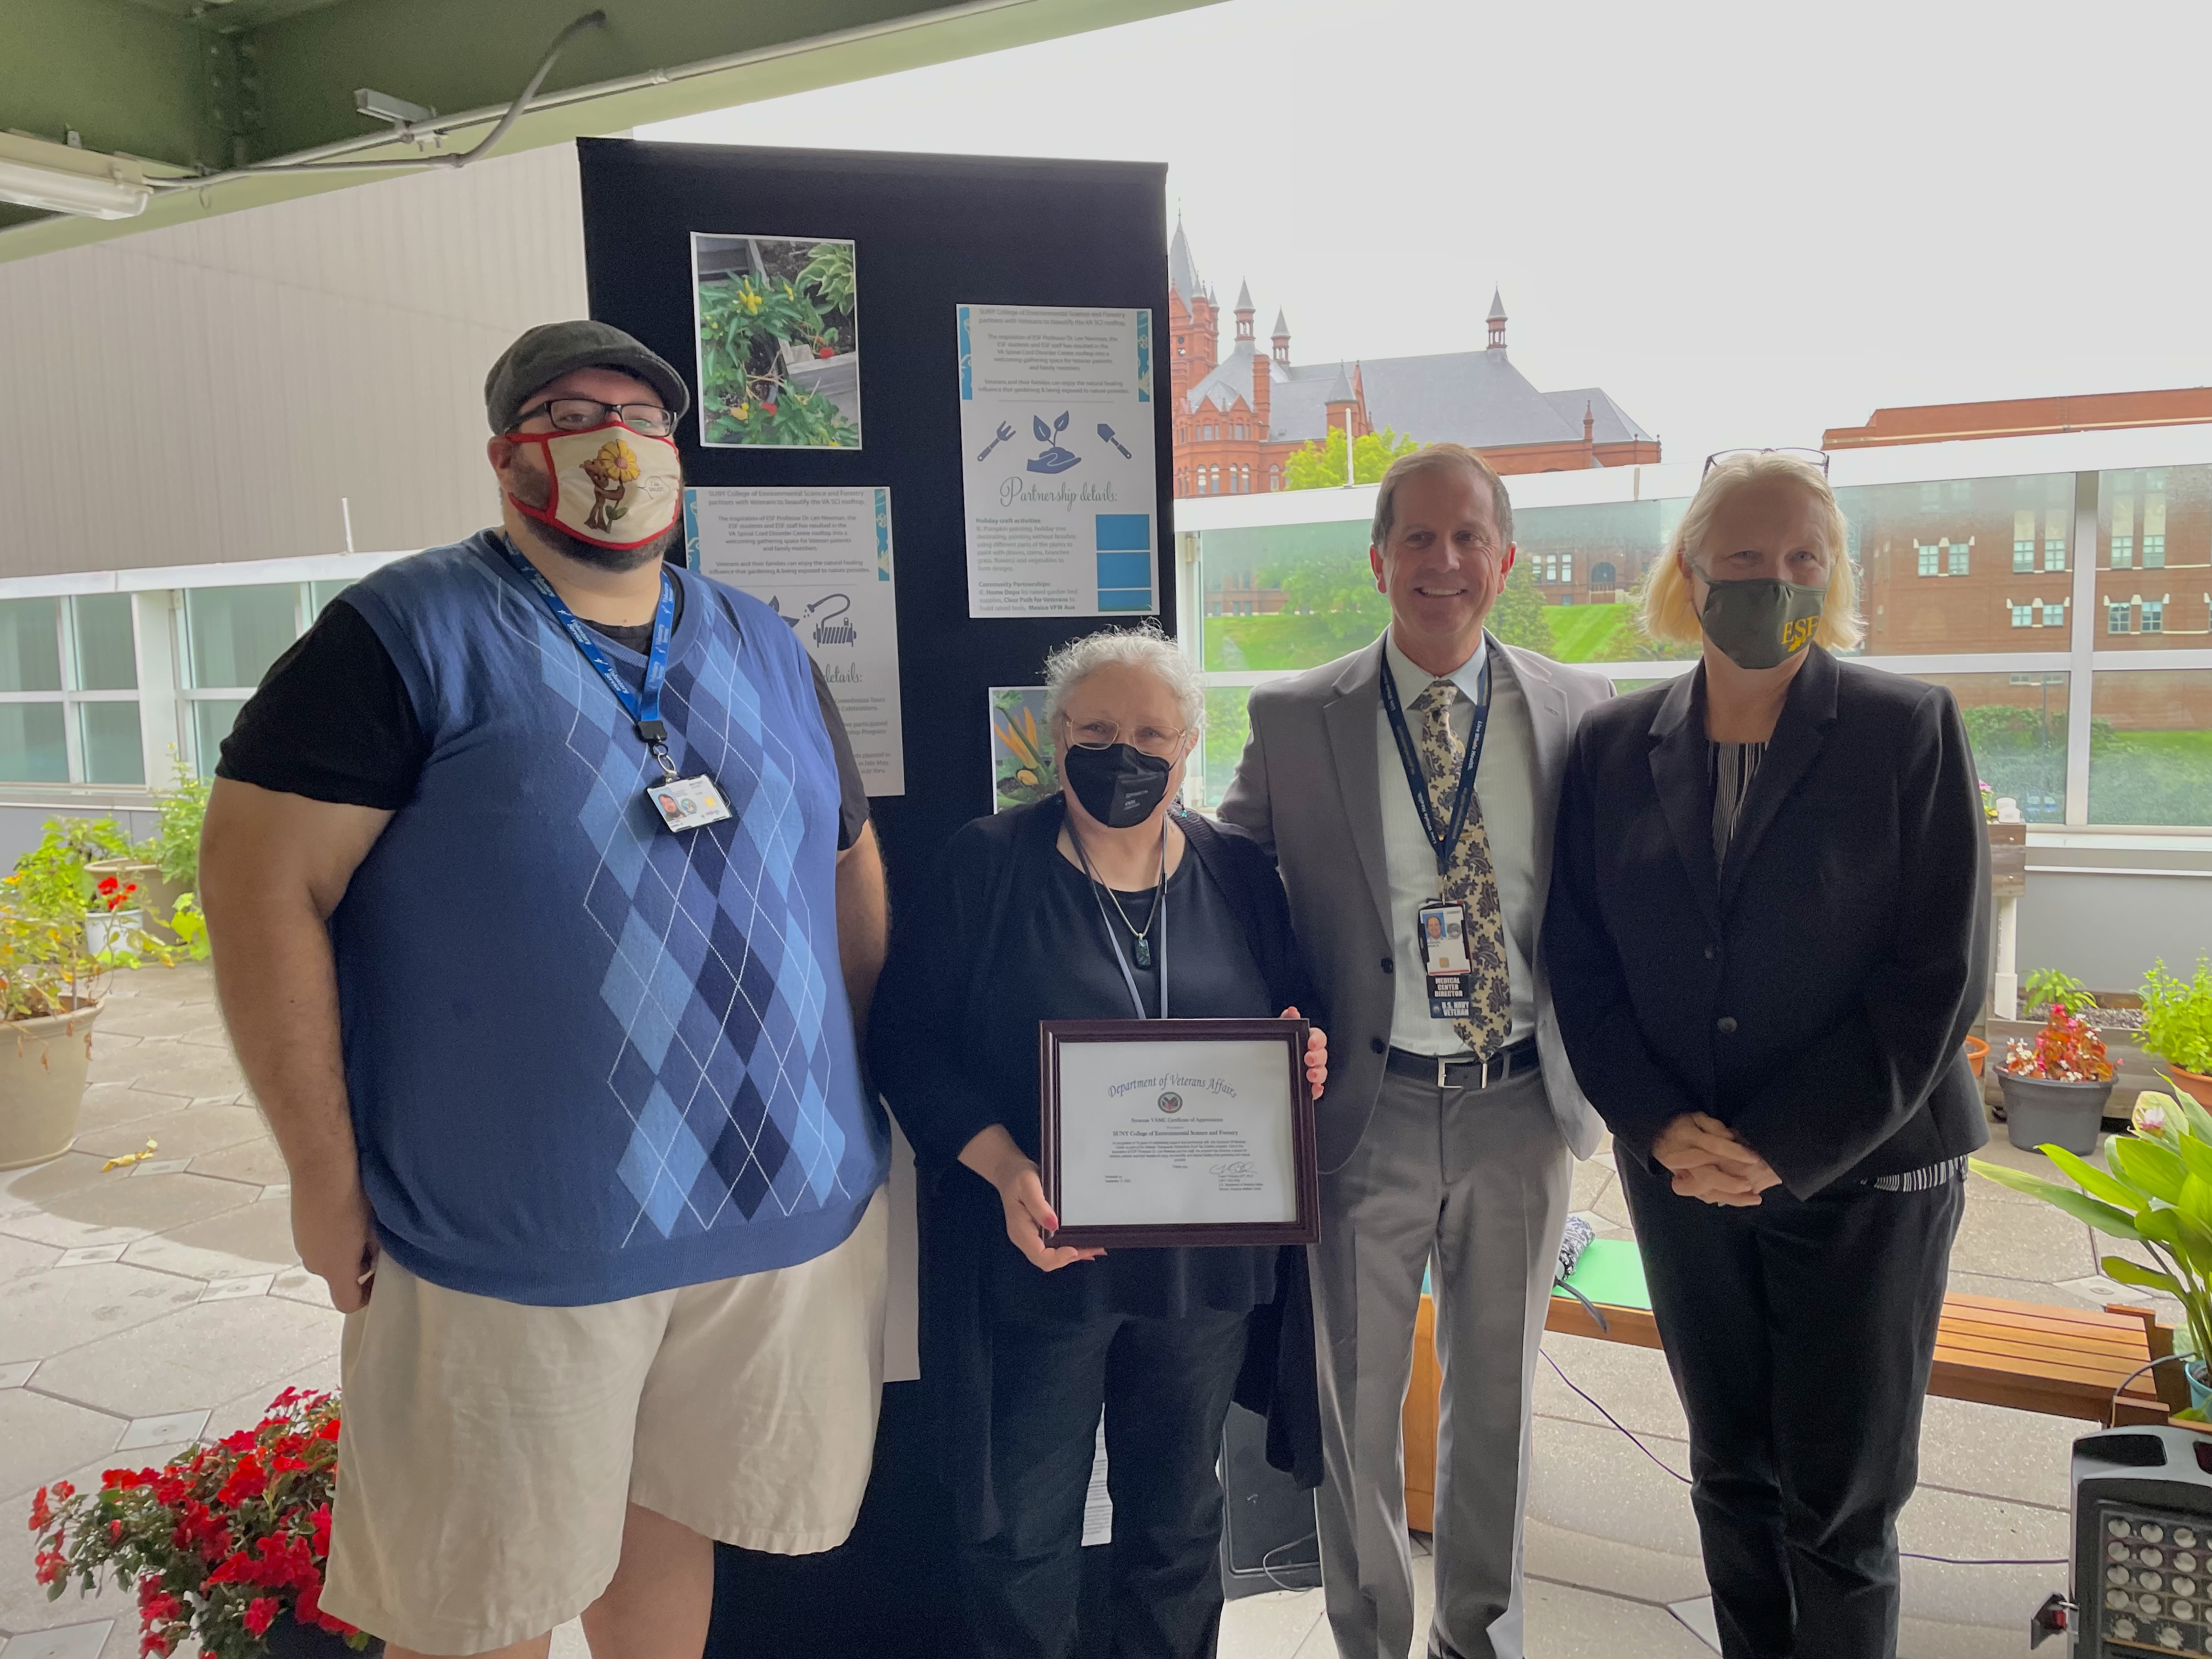 ESF representatives accept a certificate of appreciation from the VA Medical Center